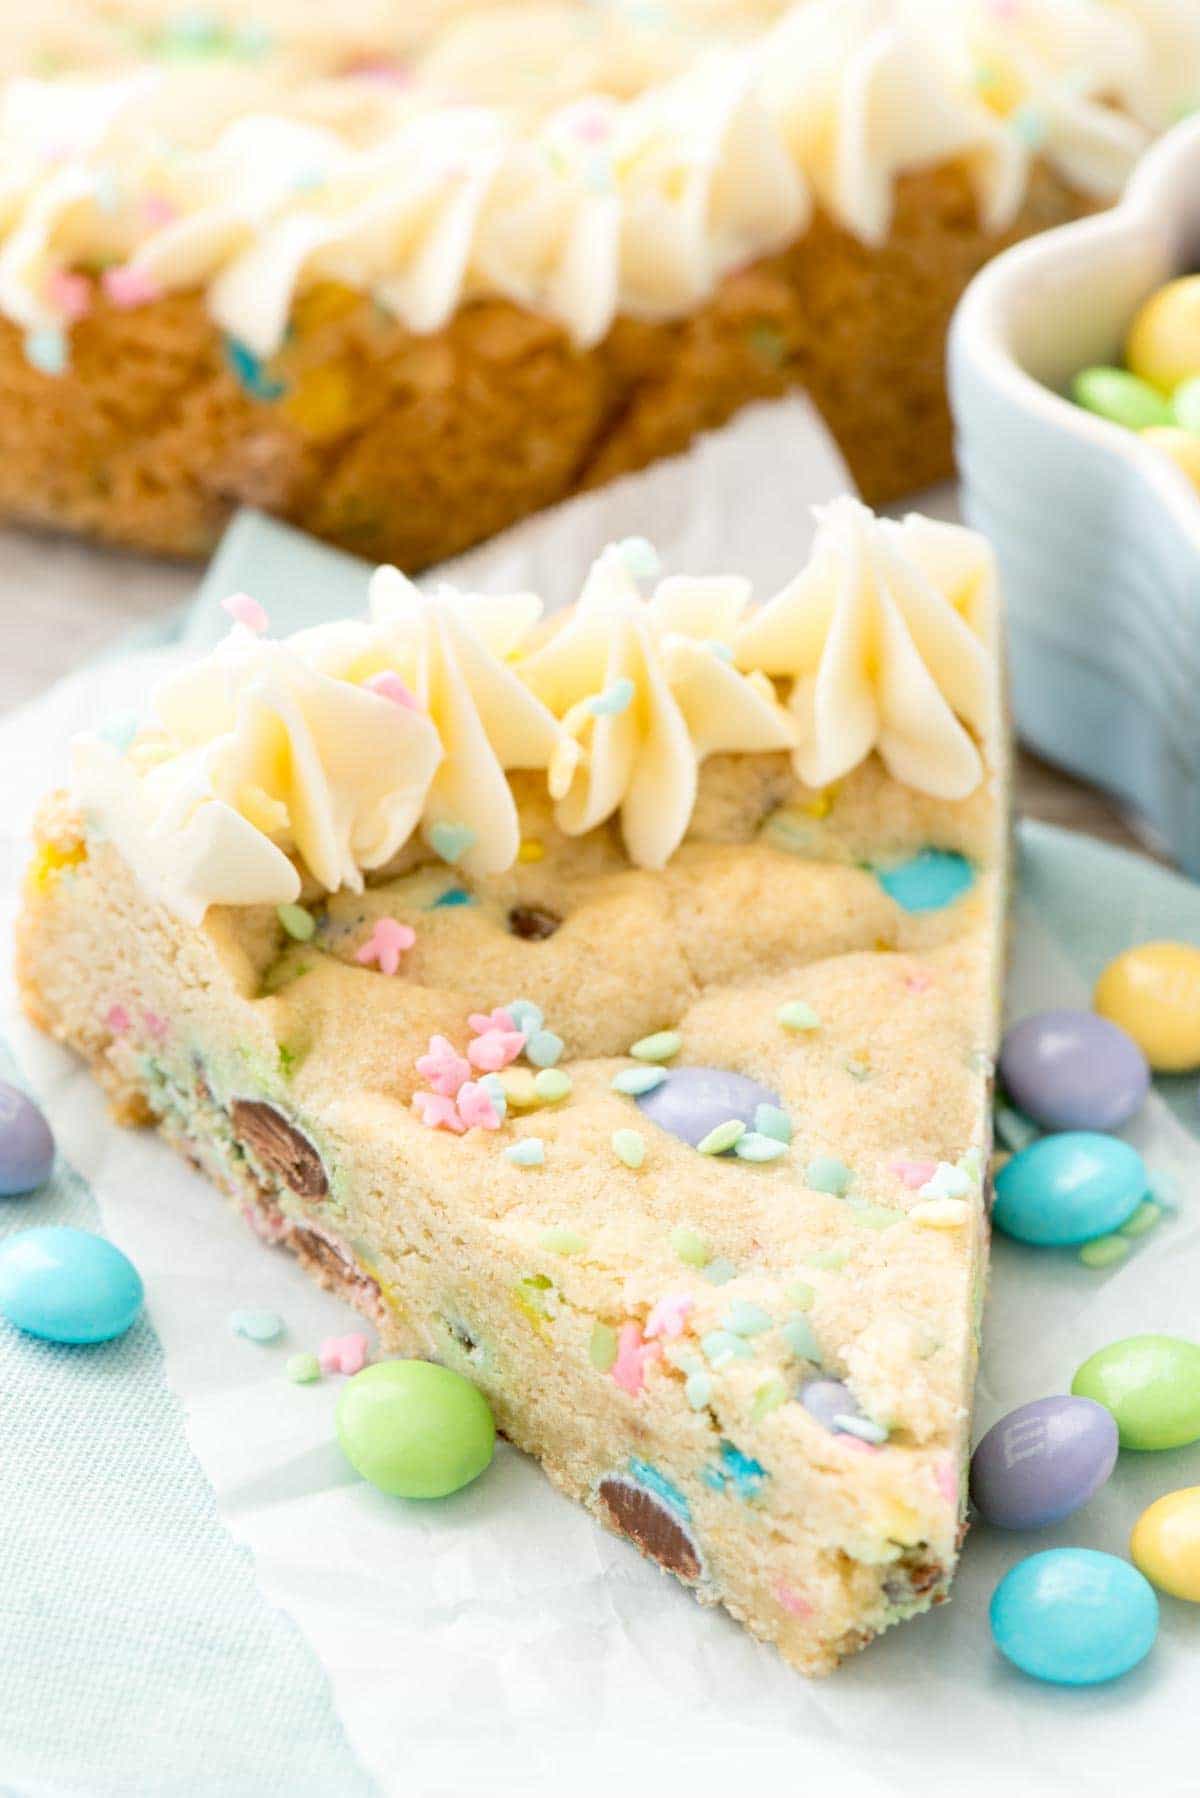 https://www.crazyforcrust.com/wp-content/uploads/2017/03/Easter-Sugar-Cookie-Cake-4-of-5.jpg